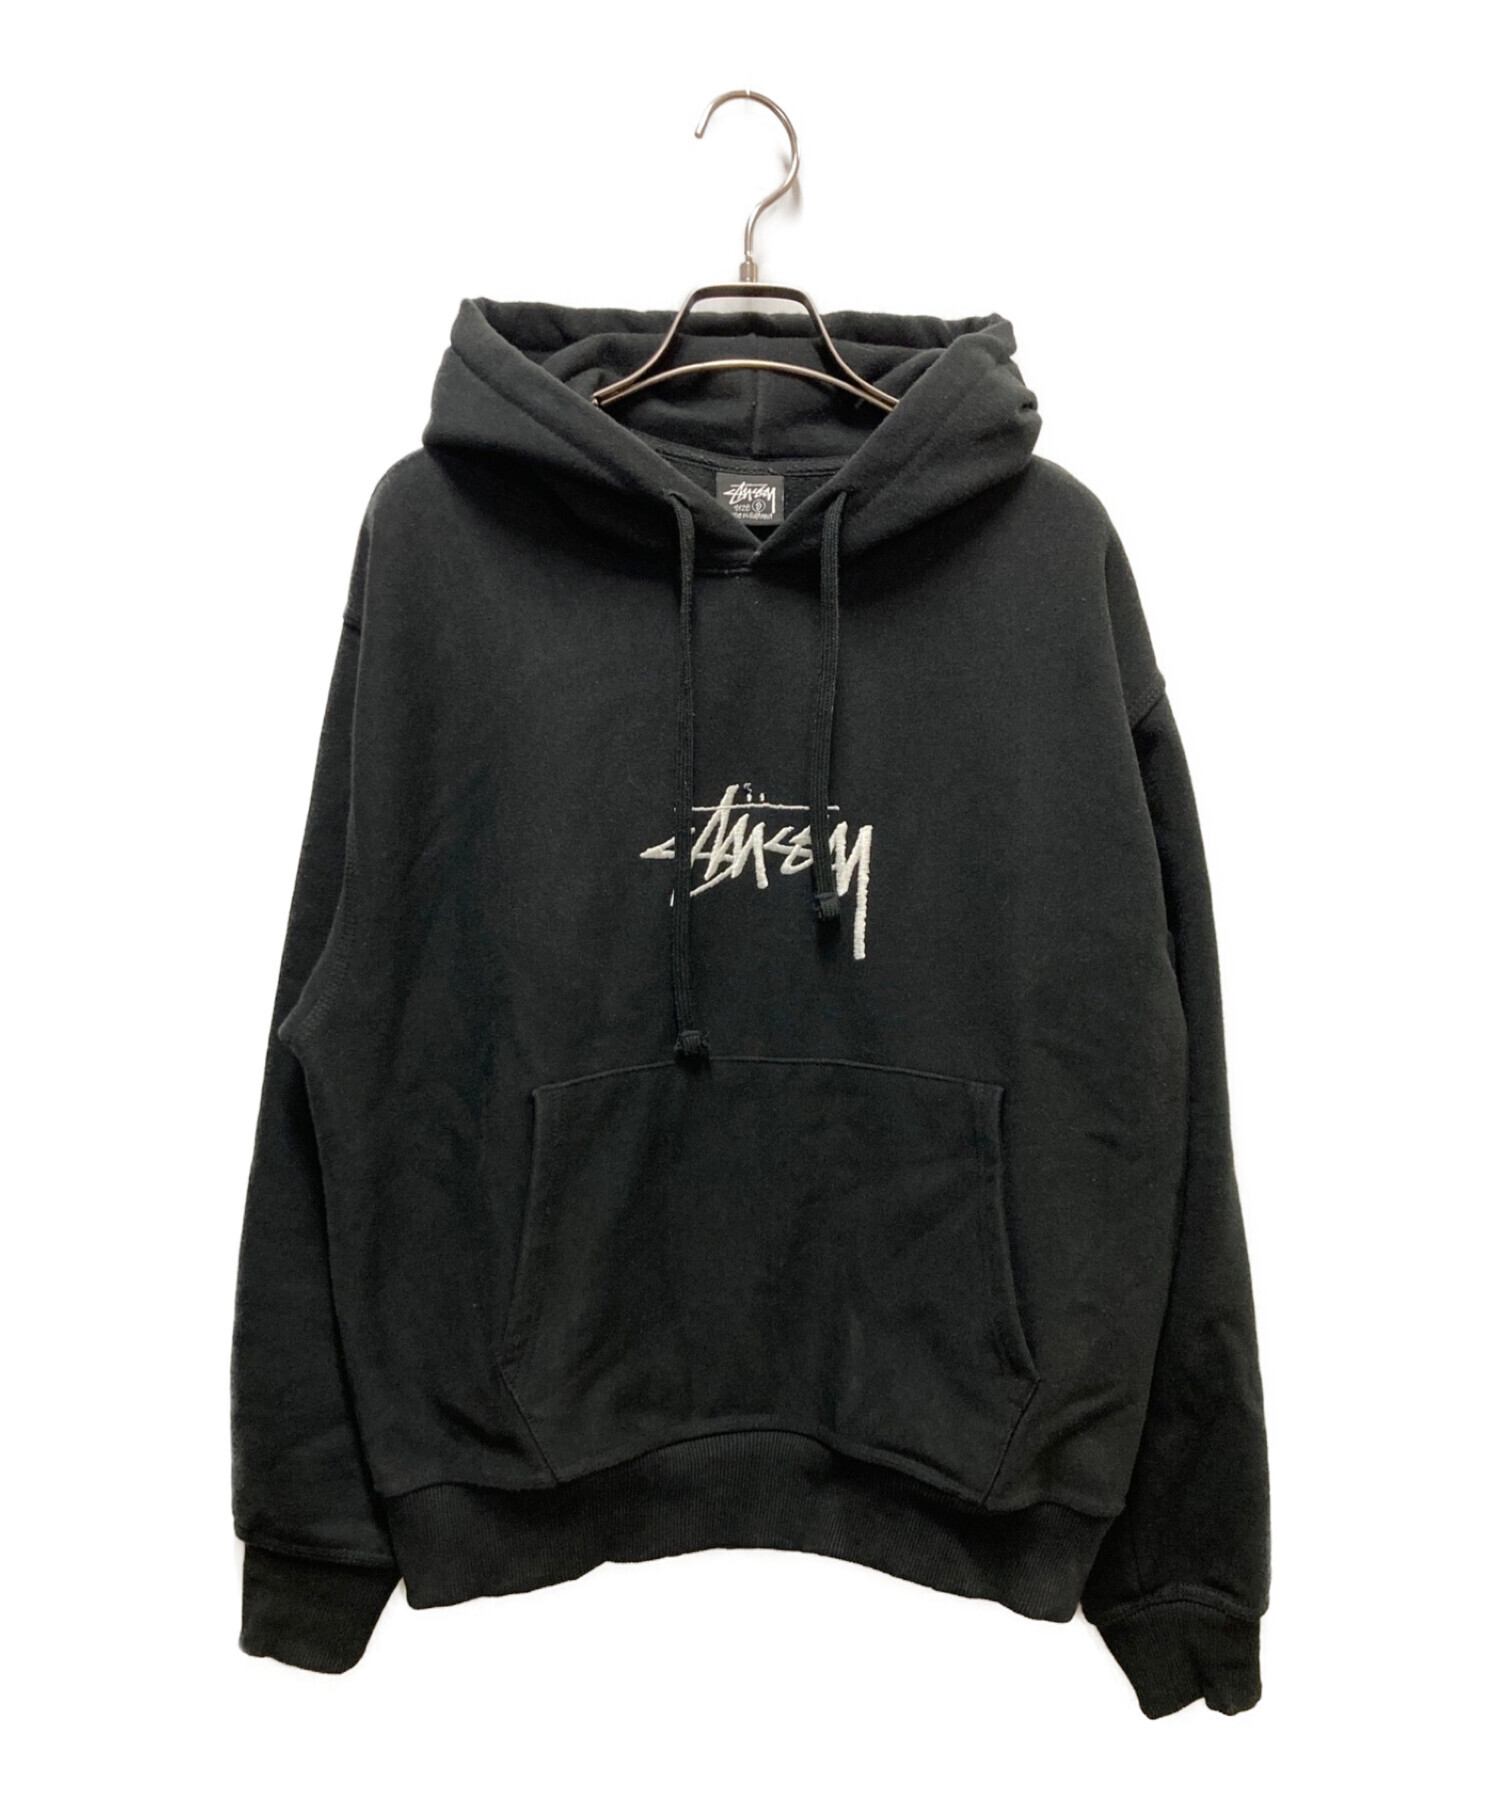 Stussy hoodie size S